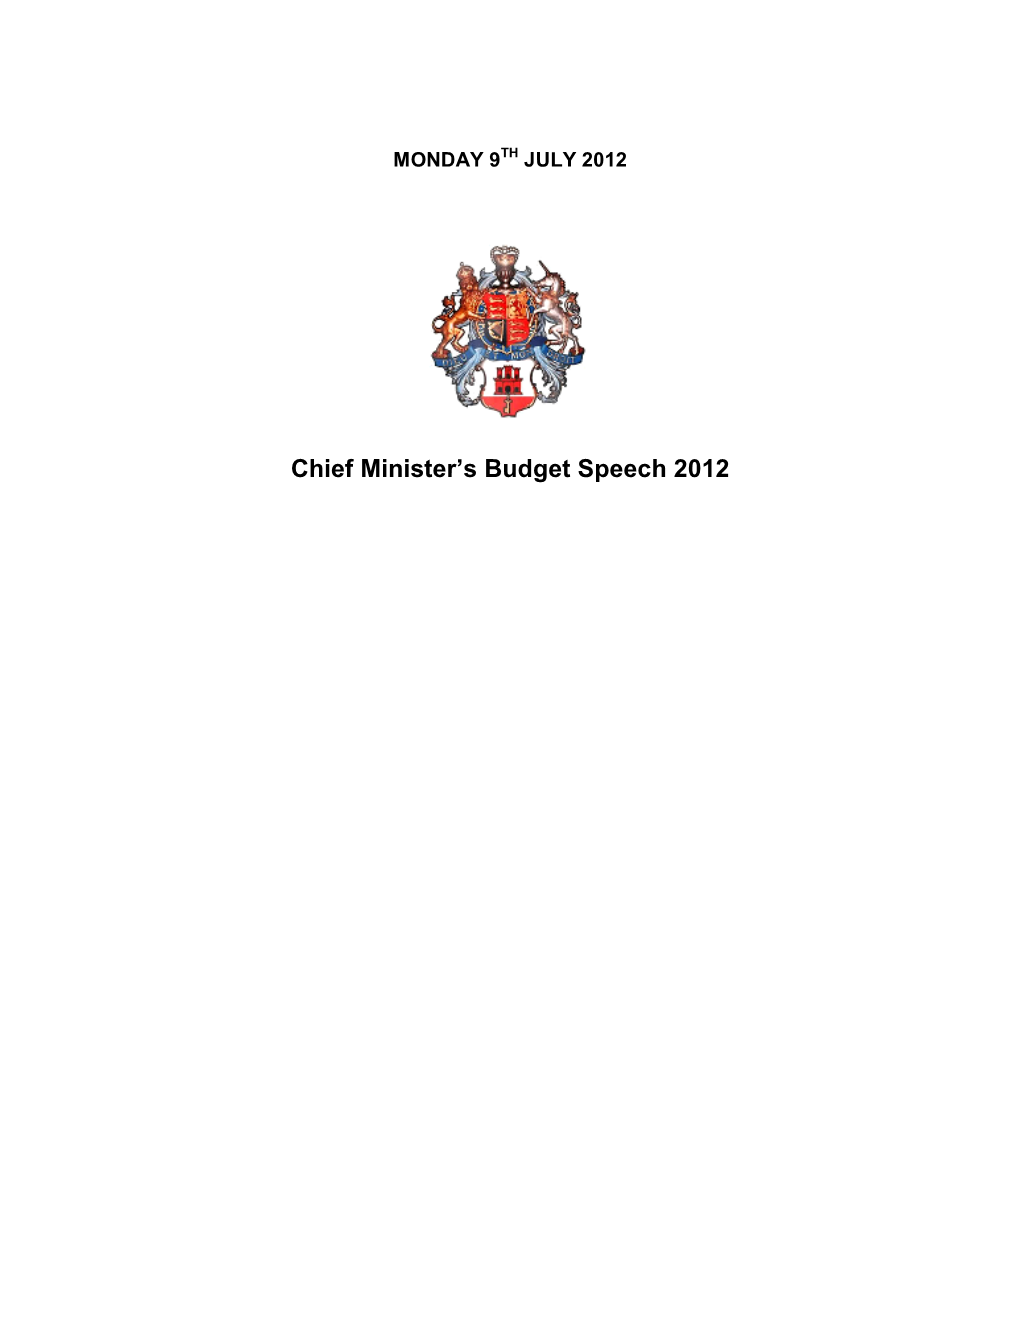 Chief Minister's Budget Speech 2012